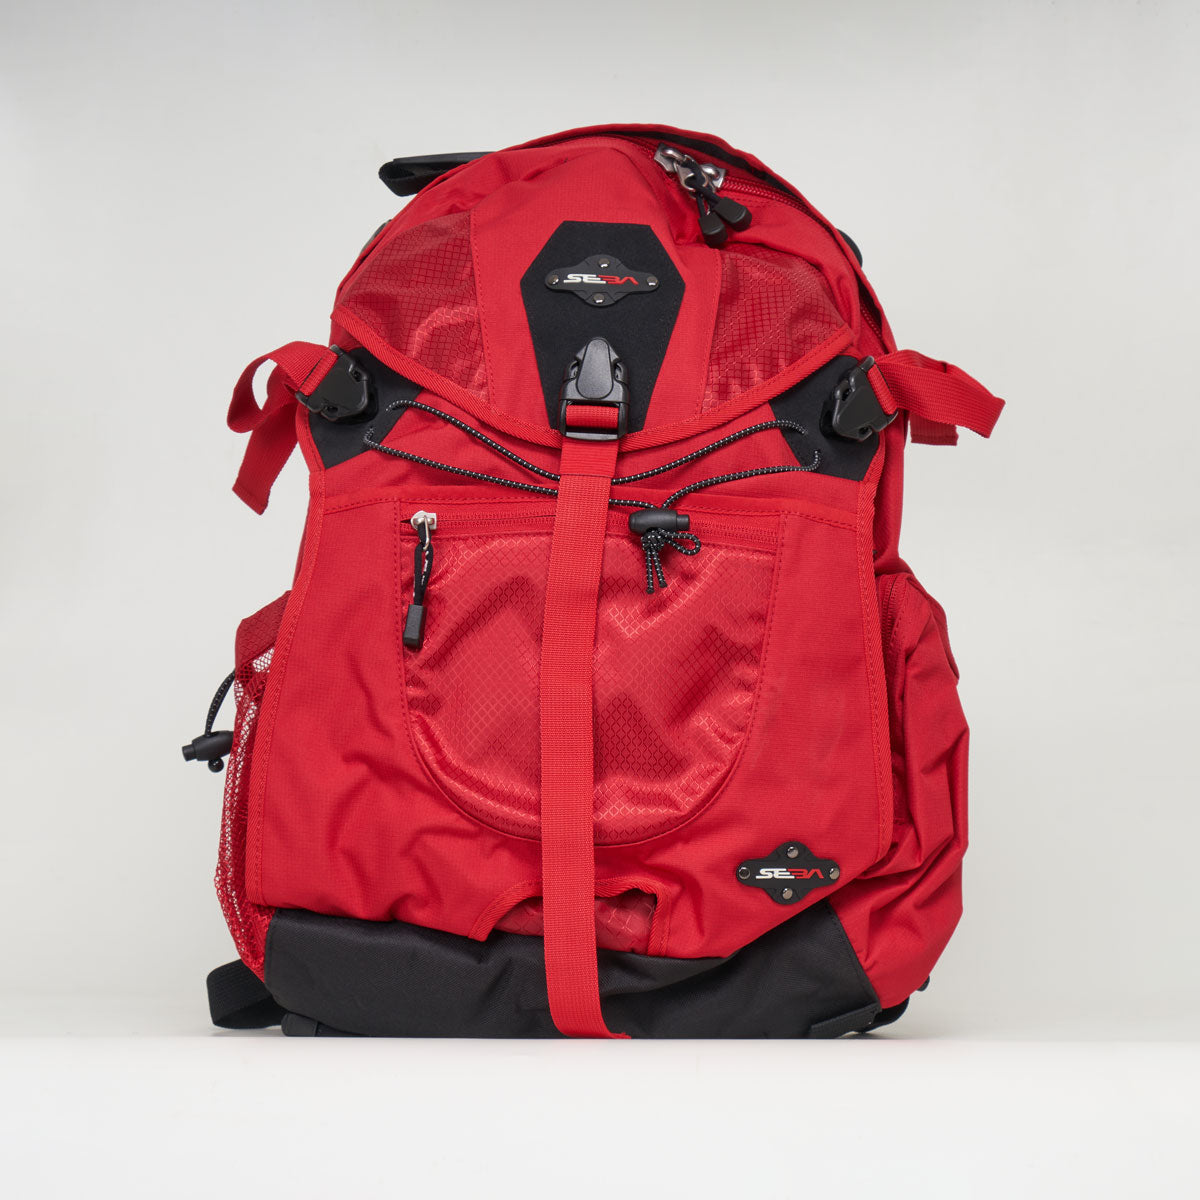 Seba Backpack Large - Red